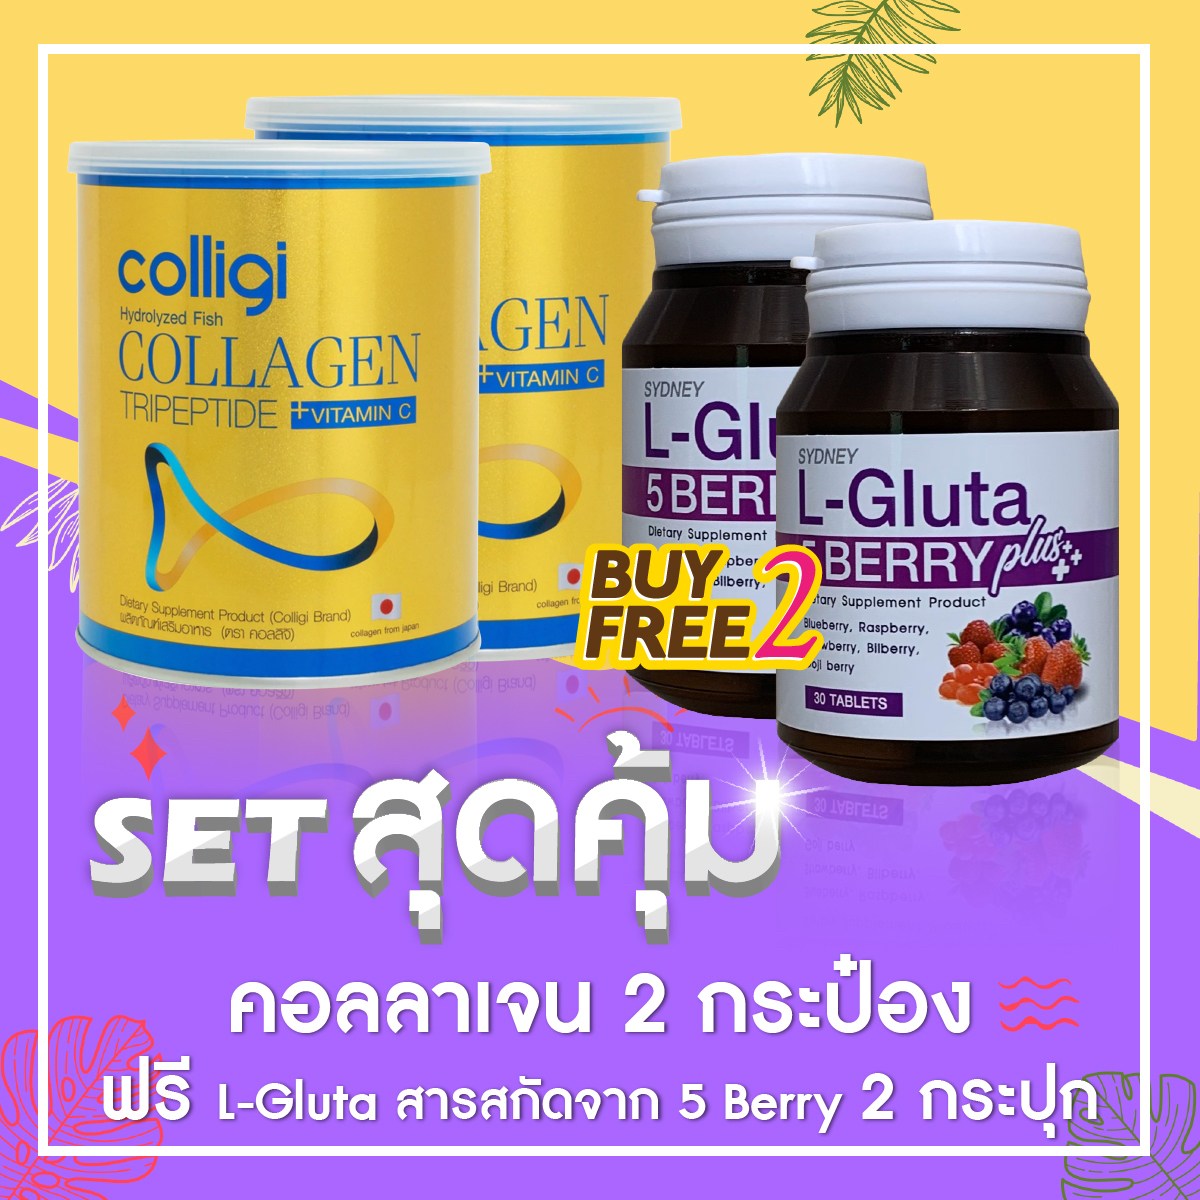 Amado Colligi Collagen TriPeptide + Vitamin C คอลลิจิ คอลลาเจน [110.66 g.] 2กระปุก คู่กับL-Gluta 5 berry แอลกลูต้า อาหารเสริมเร่งผิวขาวสูตรใหม่ L Gluta (30 เม็ดx2 กระปุก)